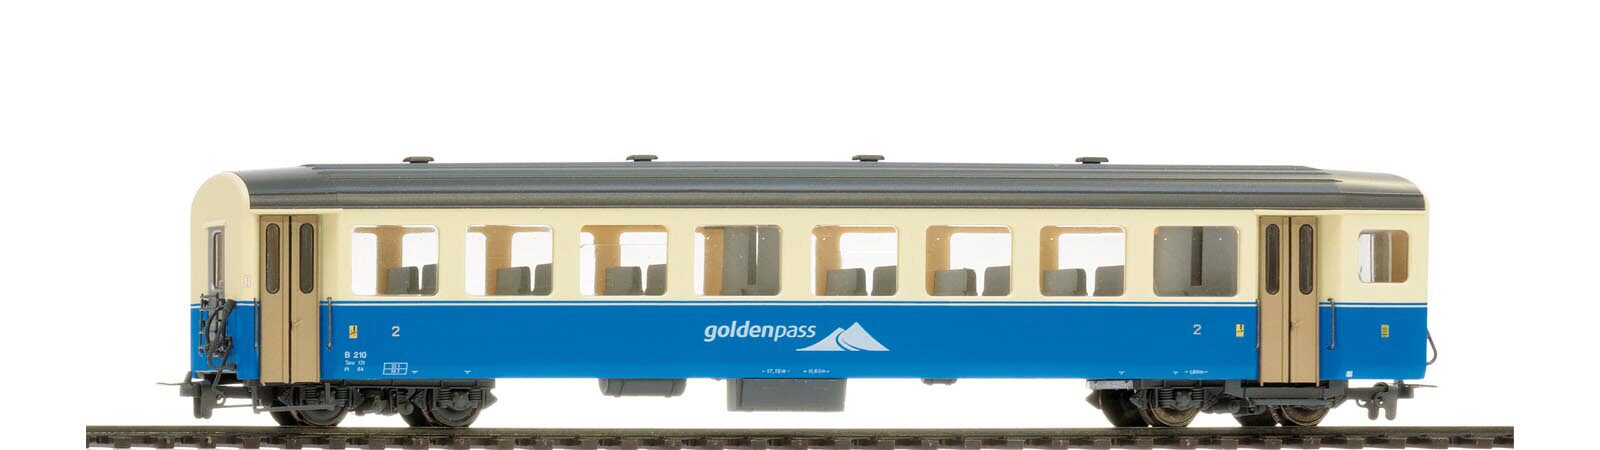 Bemo 3267330 MOB B 210 Personenwagen mit Logo "goldenpass"